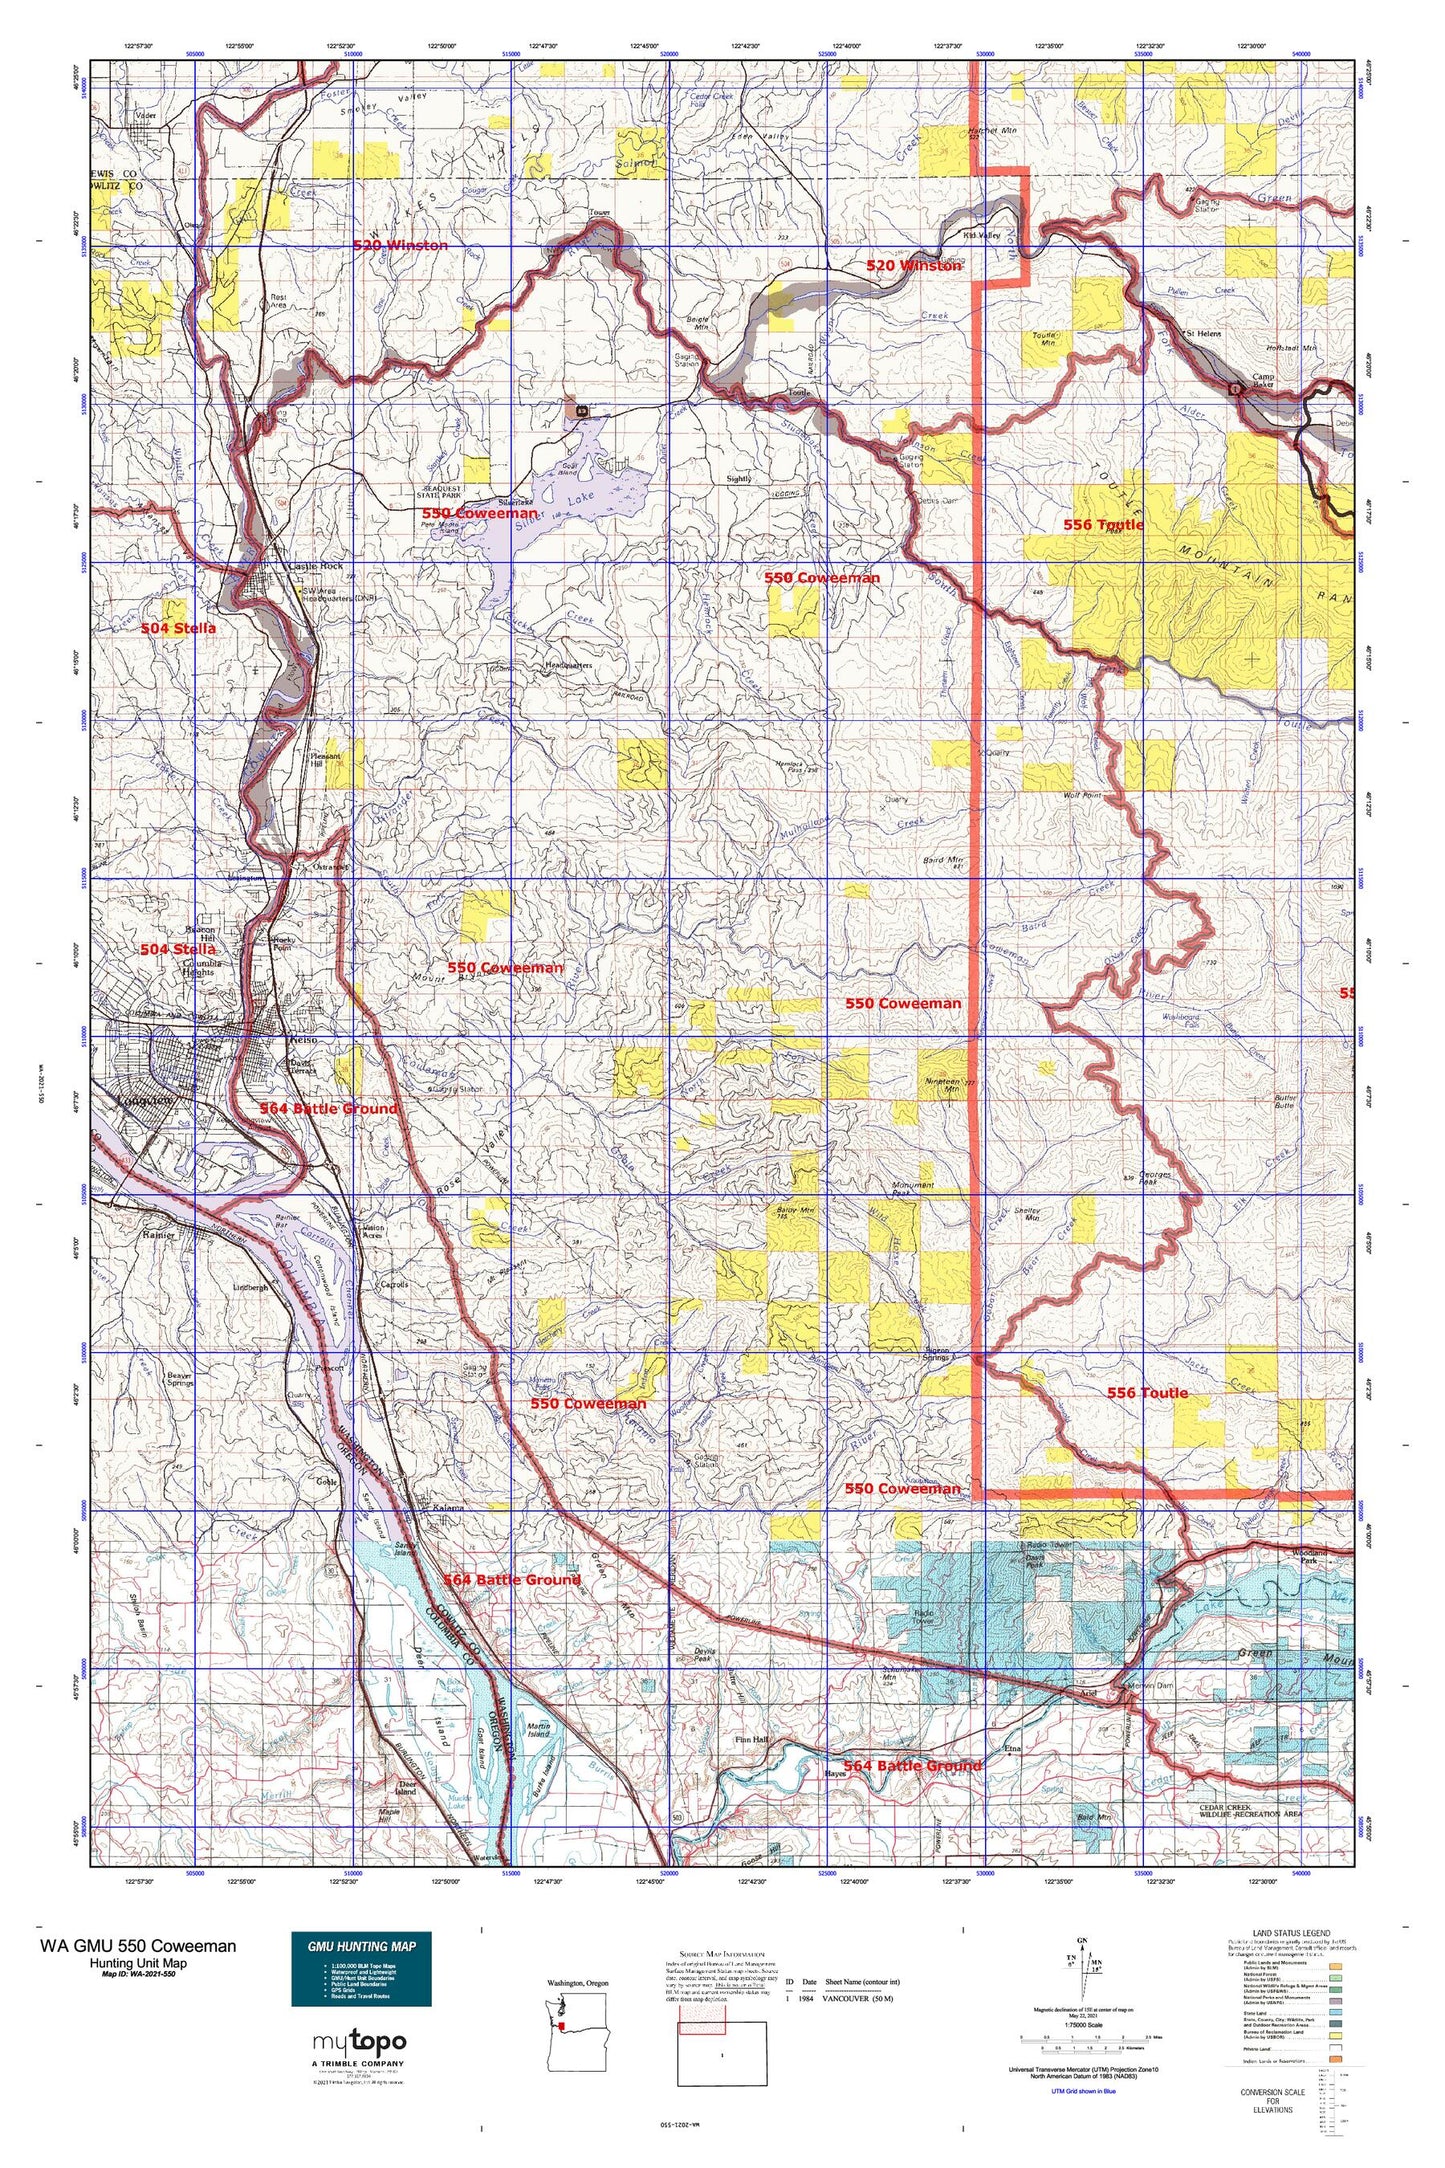 Washington GMU 550 Coweeman Map Image